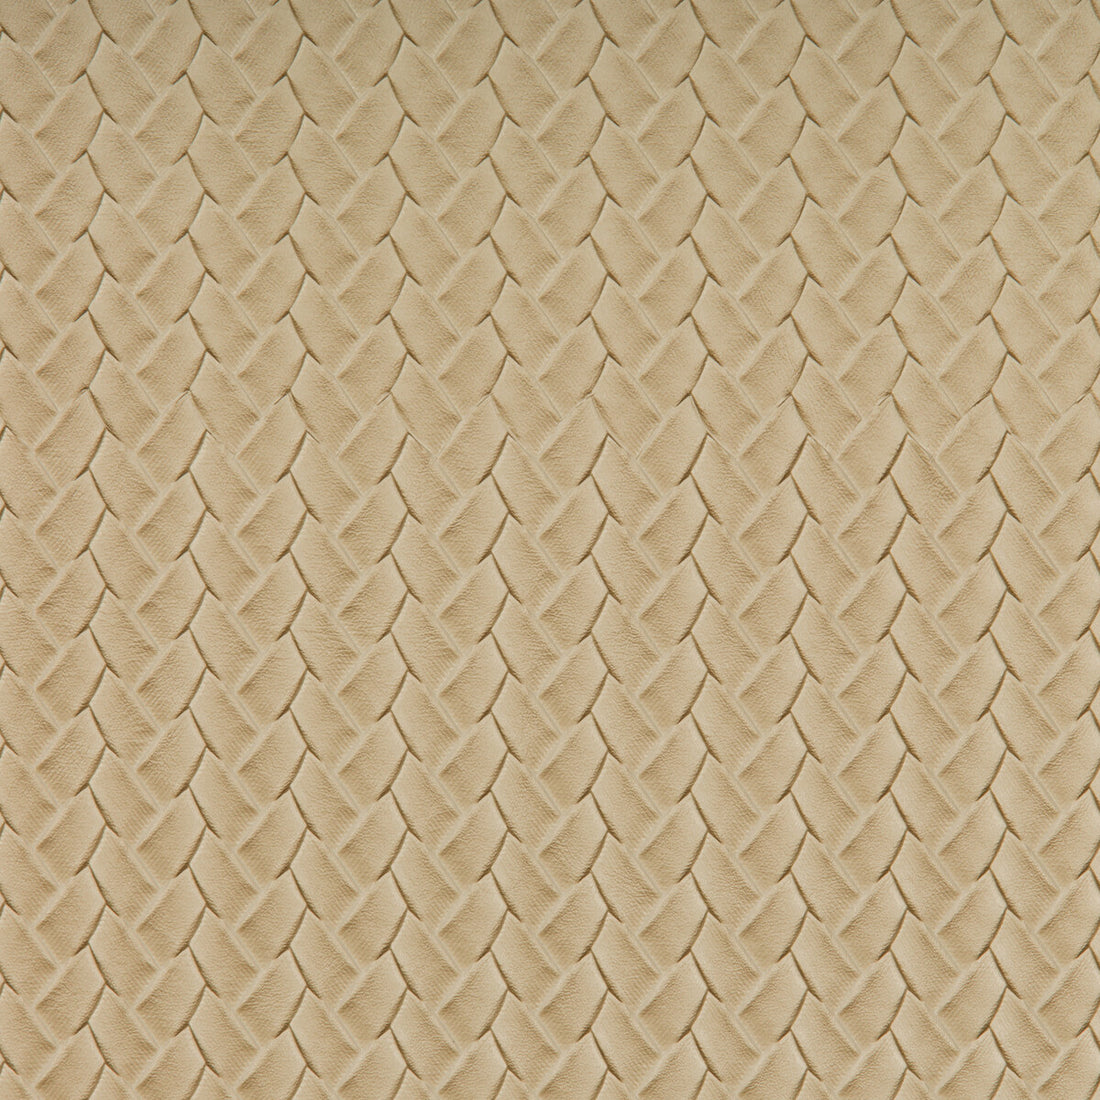 Kravet Design fabric in verlaine-16 color - pattern VERLAINE.16.0 - by Kravet Design